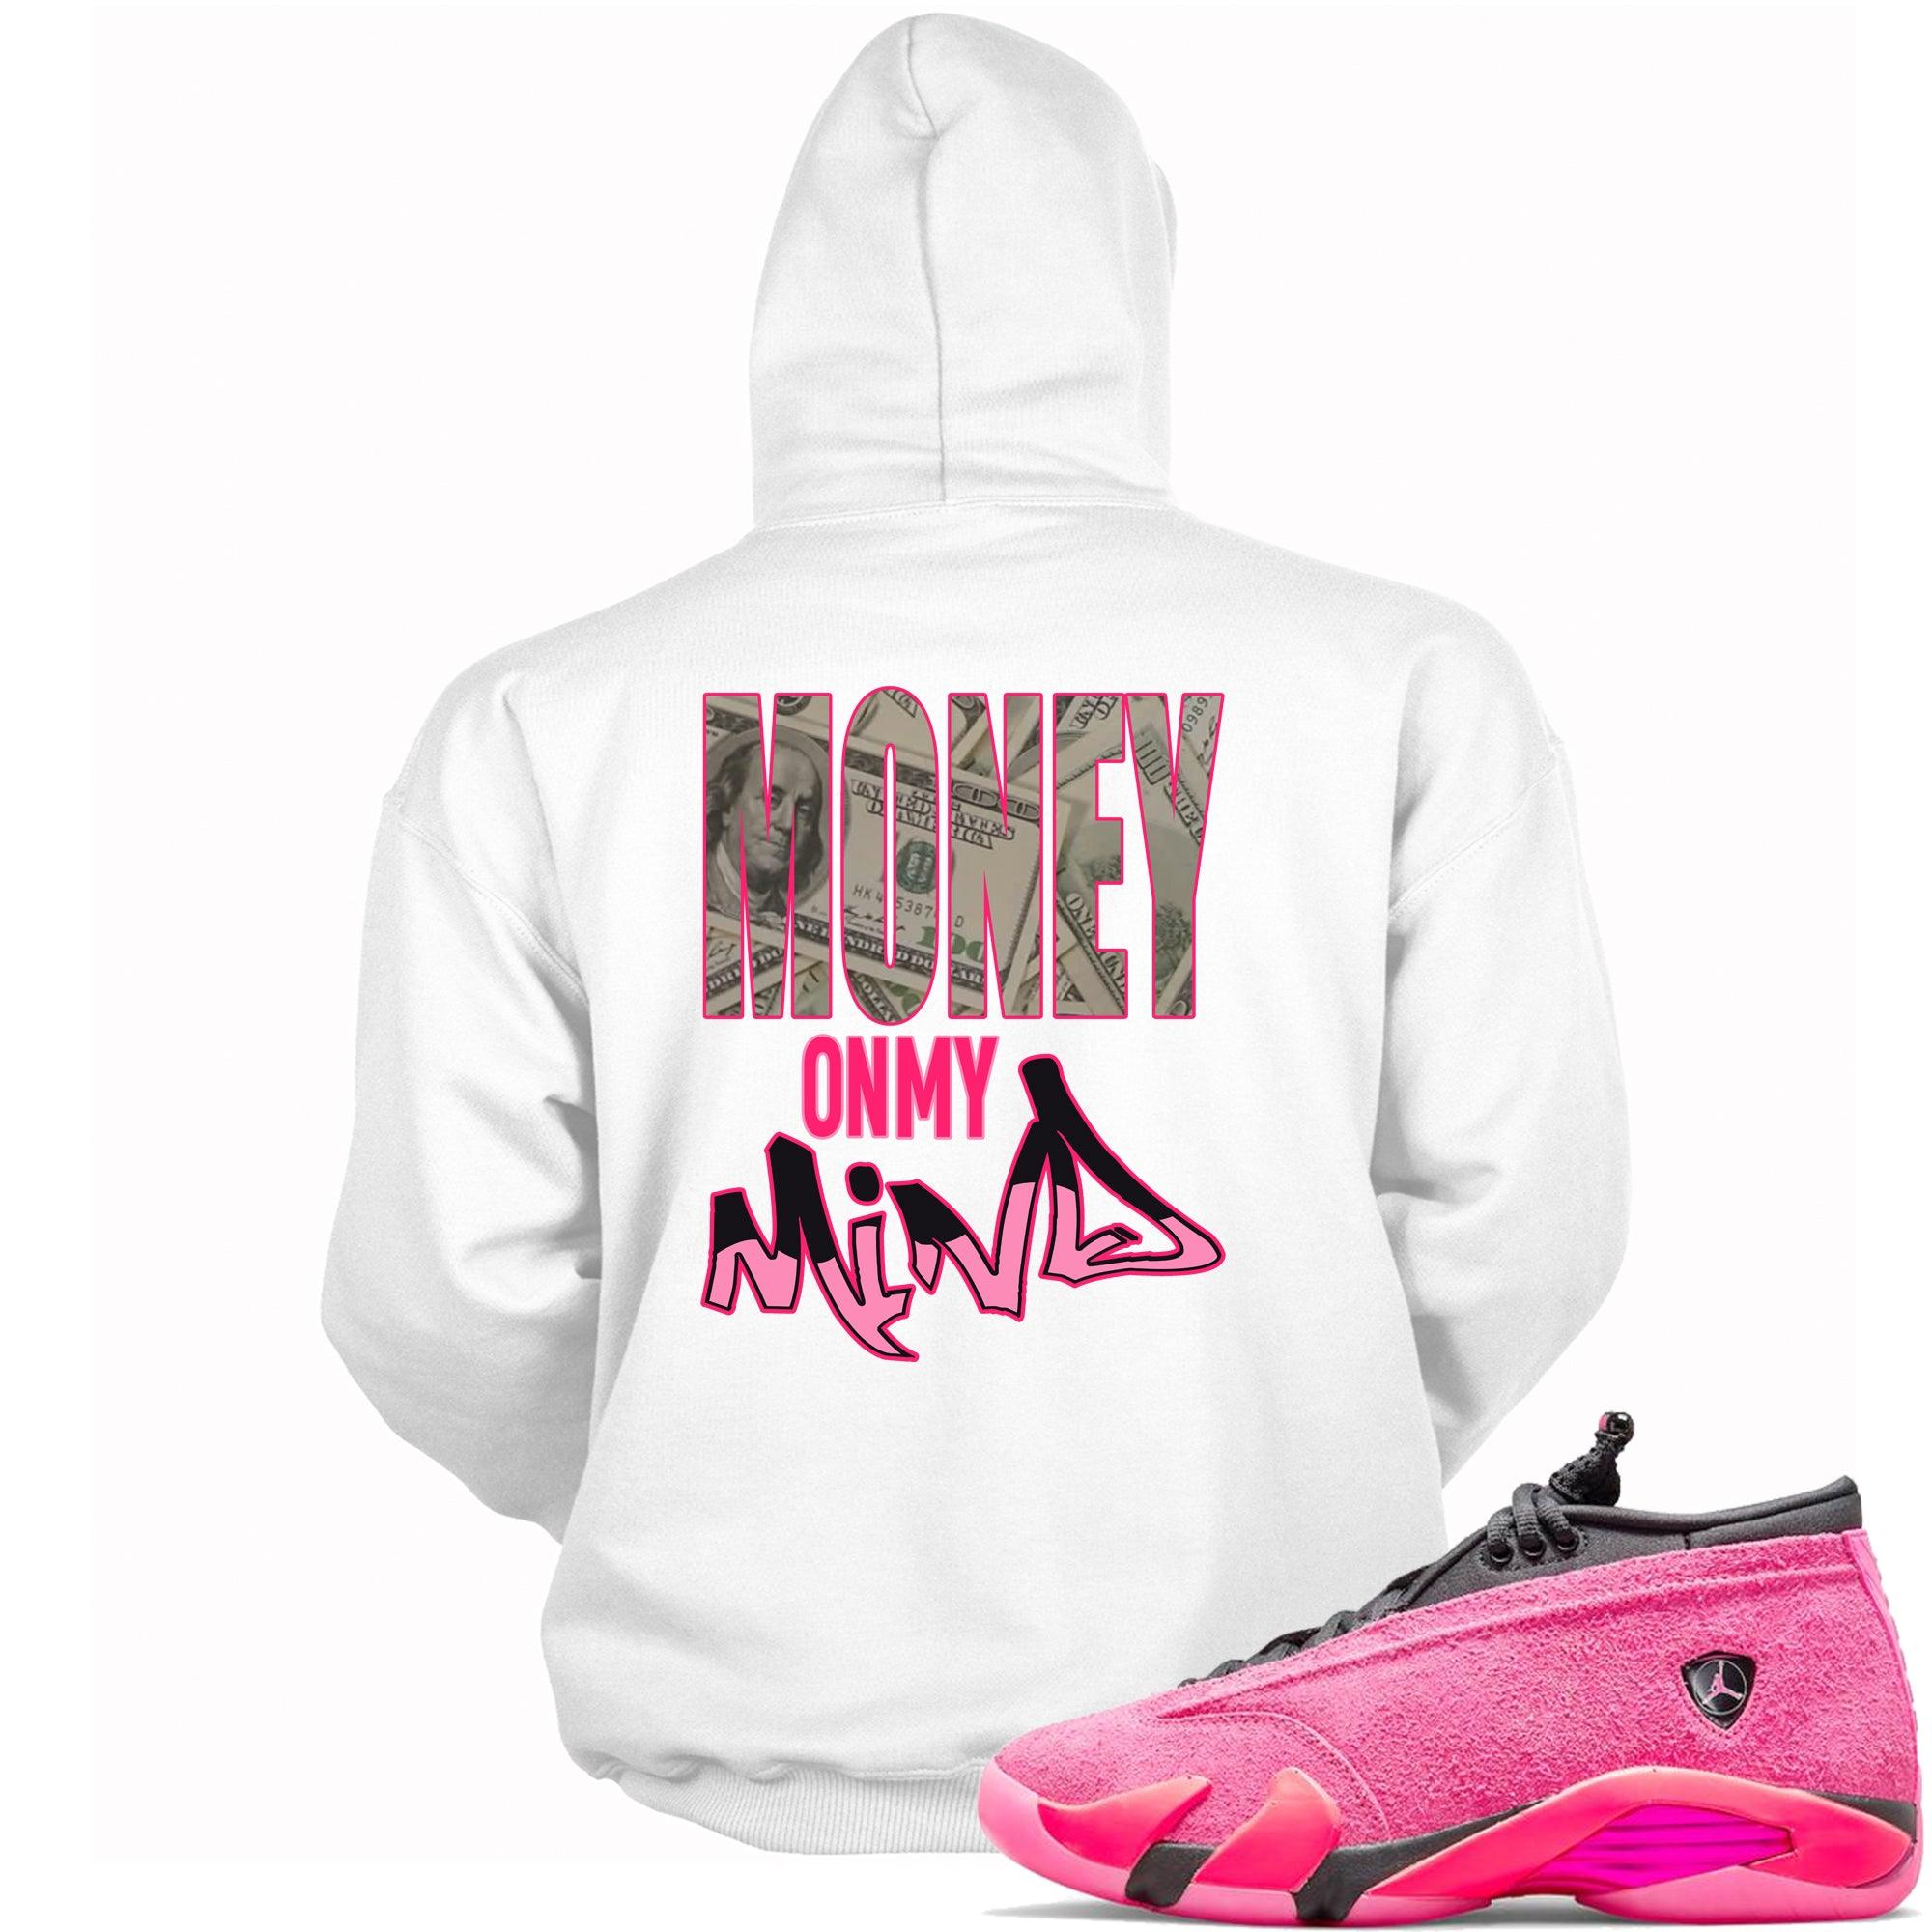 Money On My Mind Hoodie AJ 14s Low Shocking Pink photo 